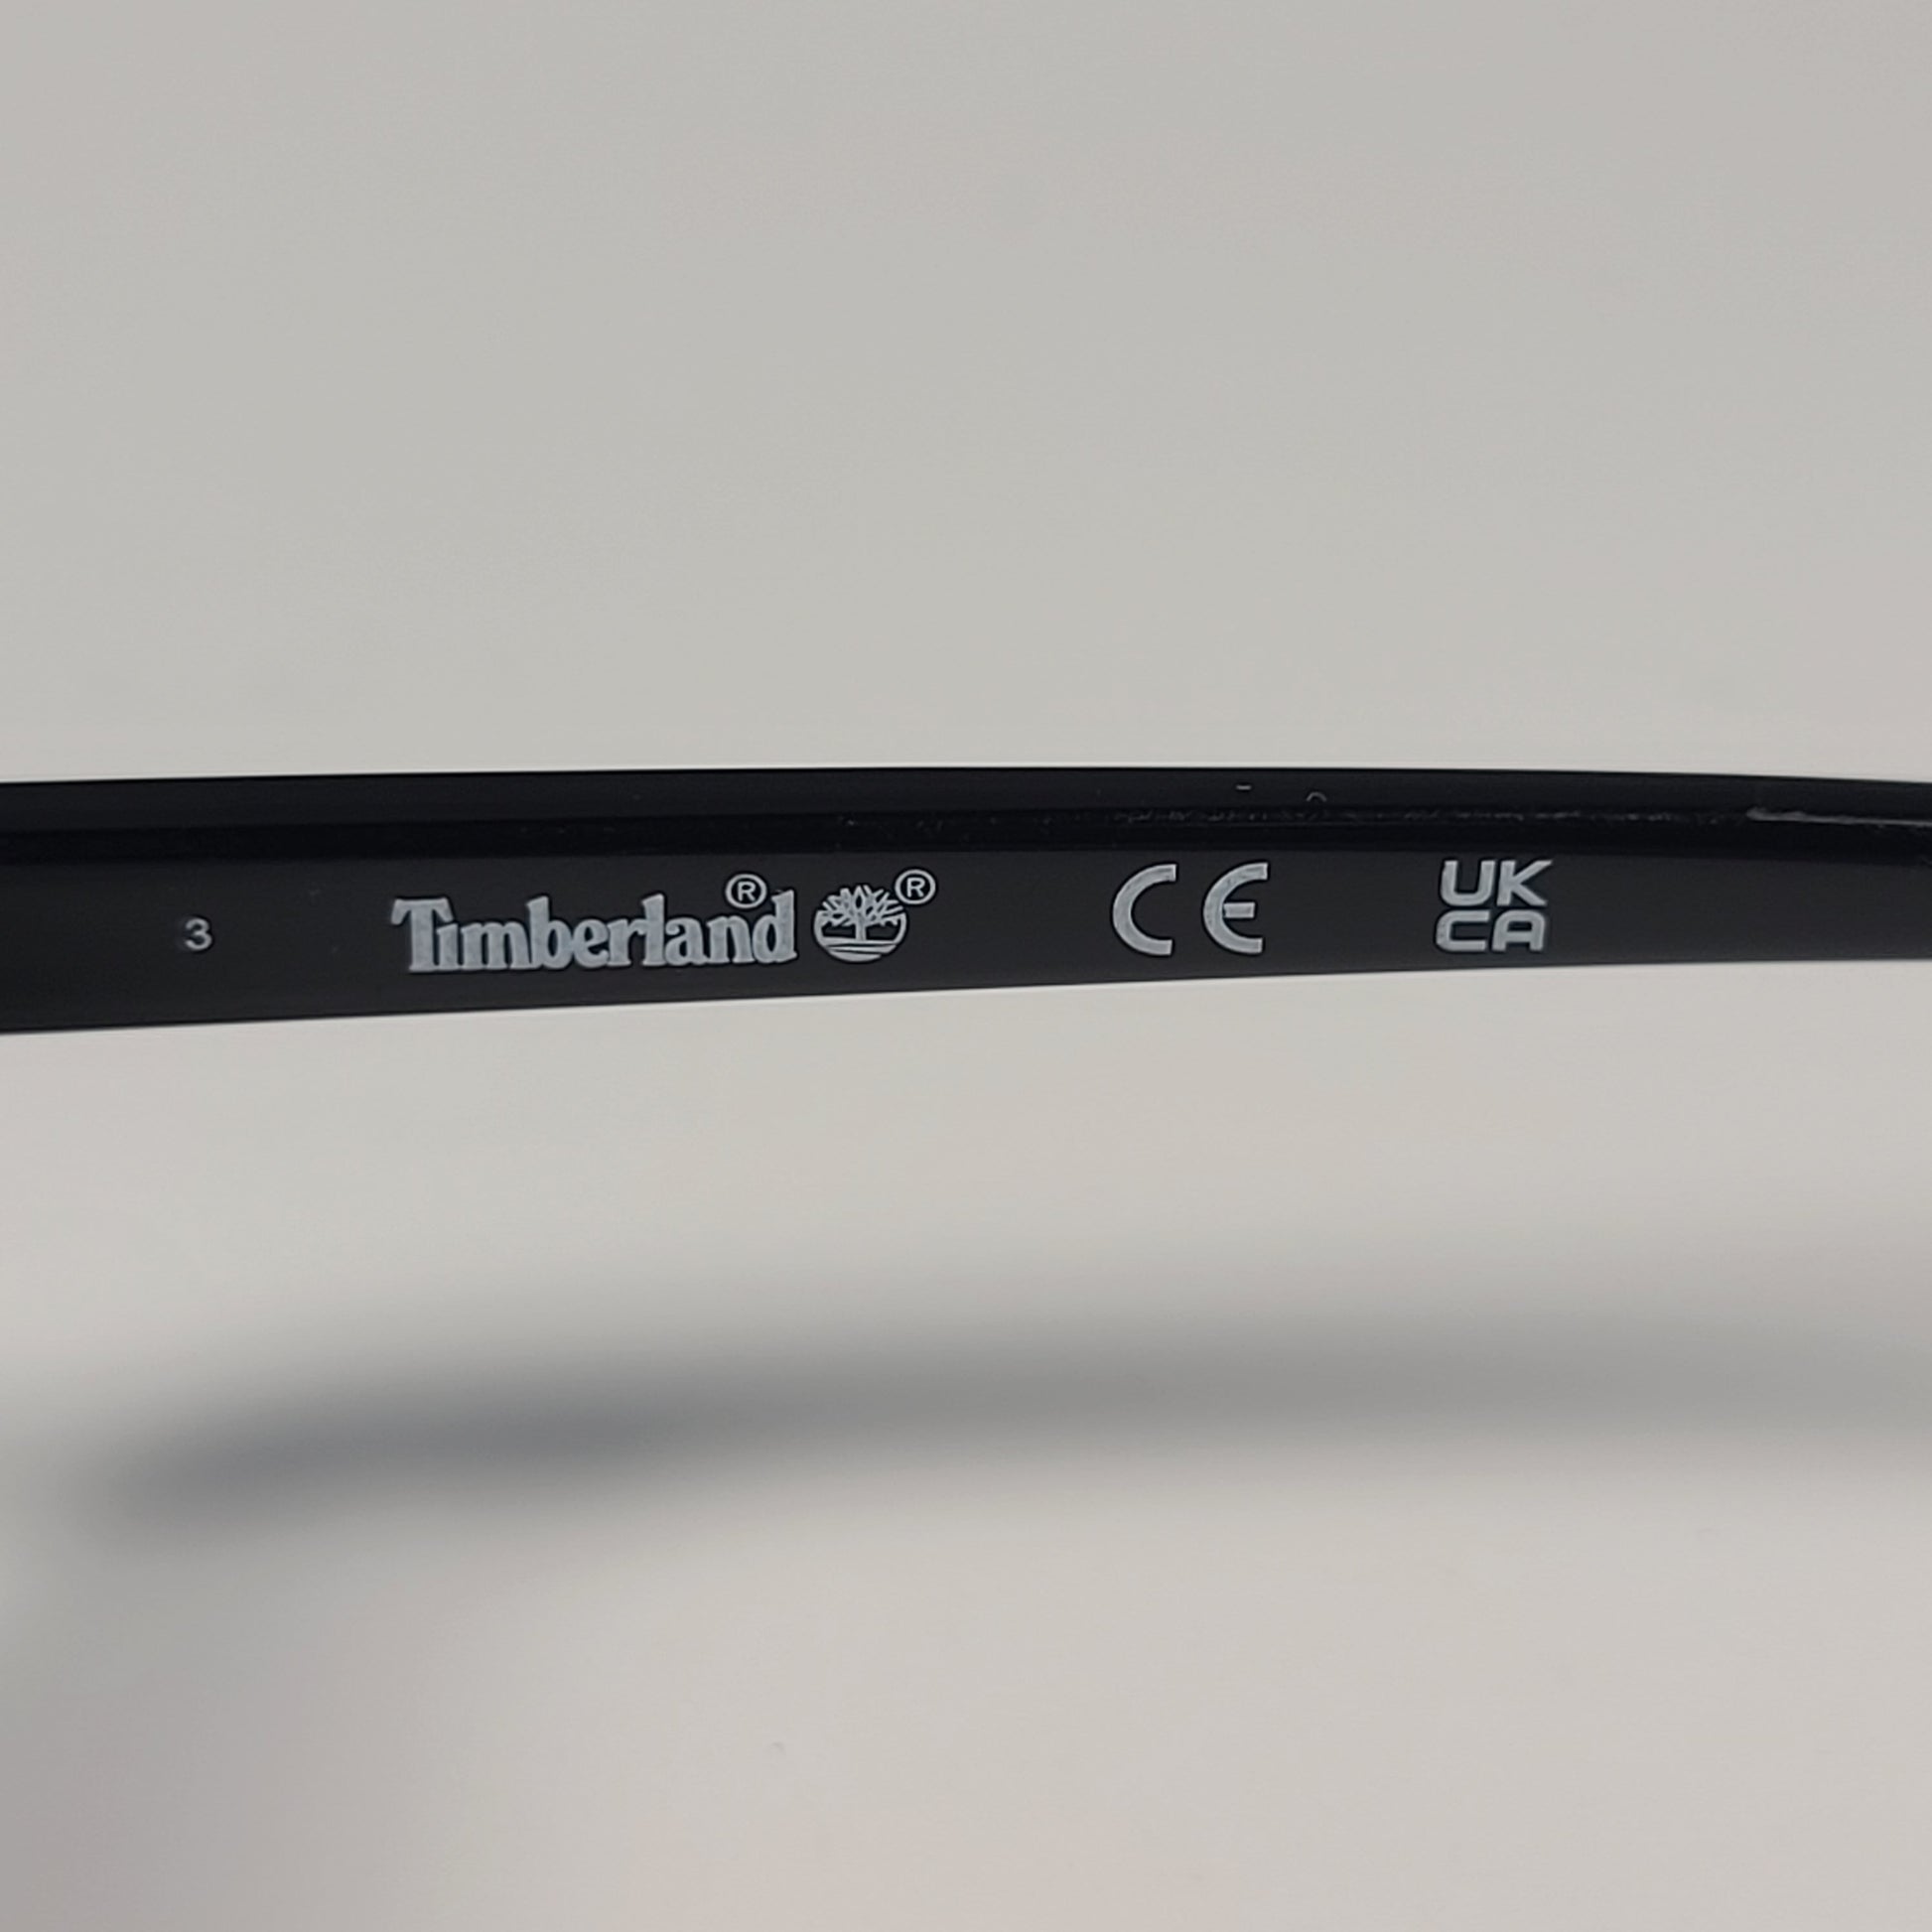 Timberland Aviator Sunglasses Silver Shiny Black Frame Smoke Gradient Lens TB7141 08B - Sunglasses